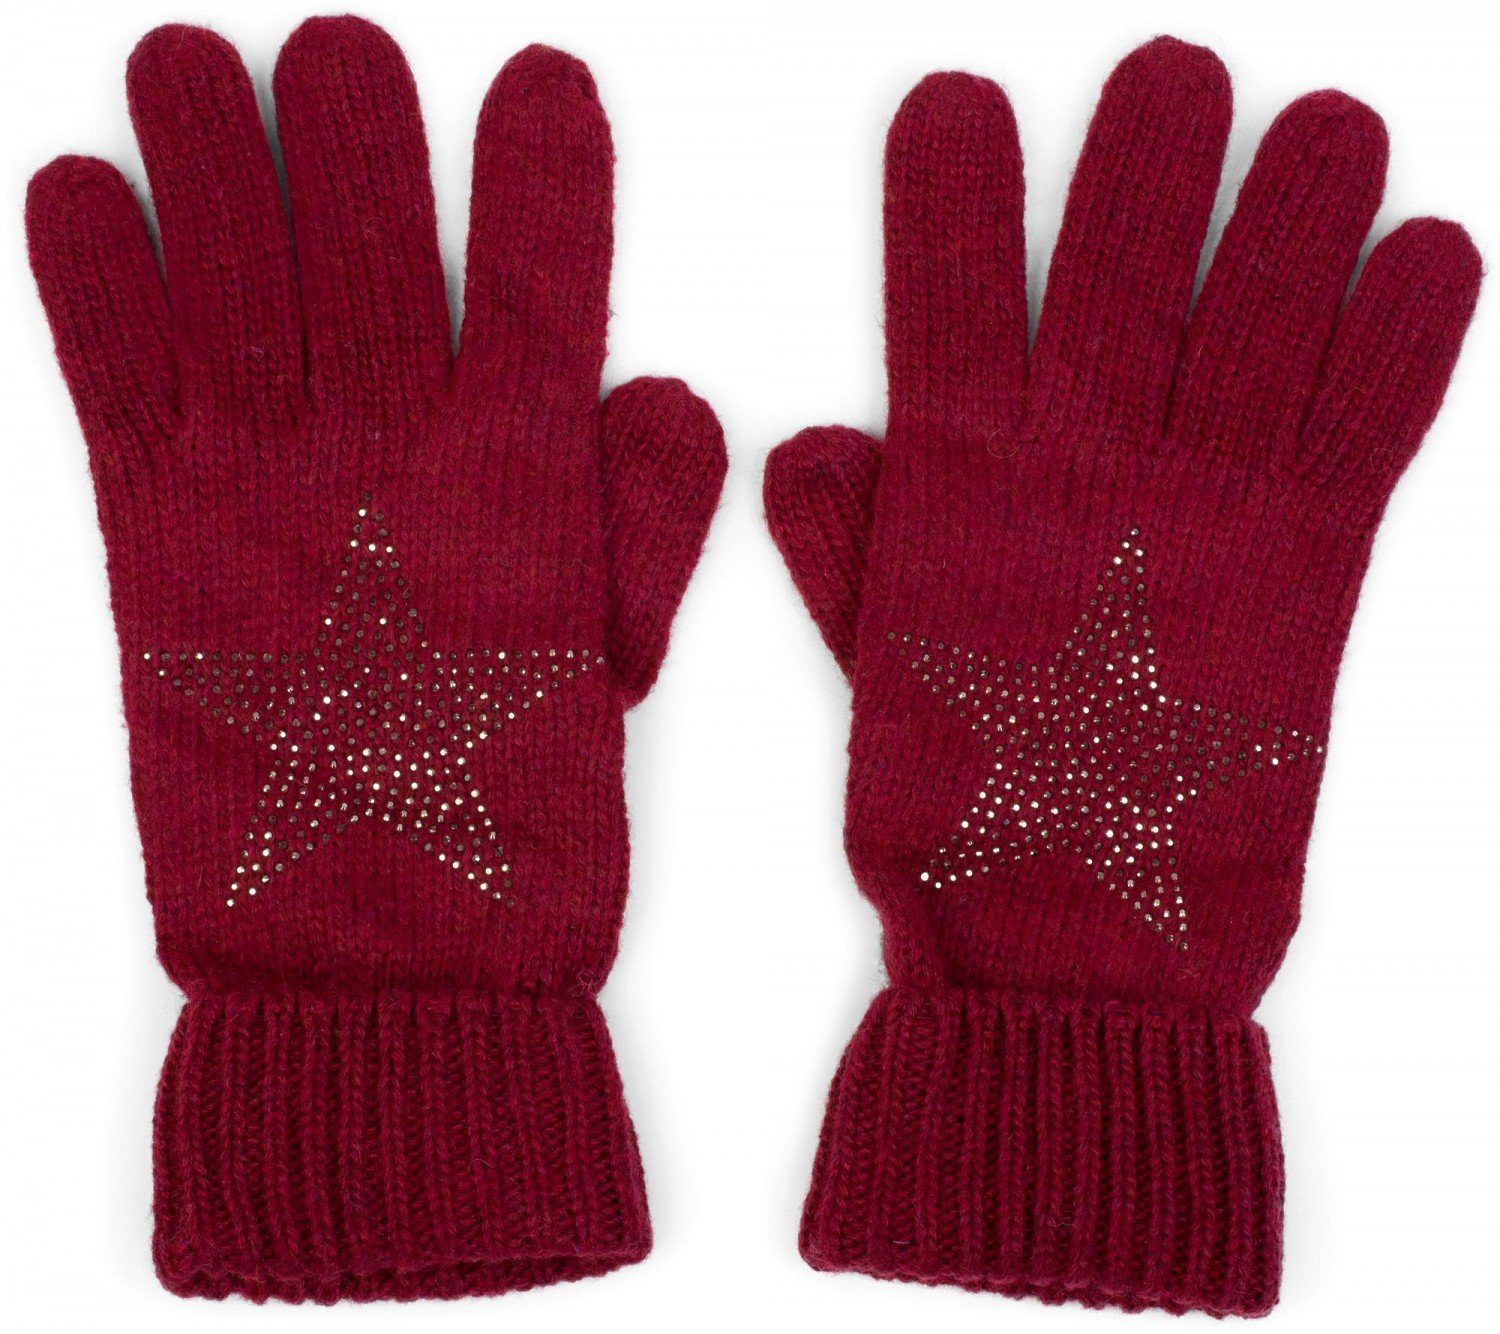 Strass Handschuhe mit styleBREAKER Stern Strick Strickhandschuhe Bordeaux-Rot